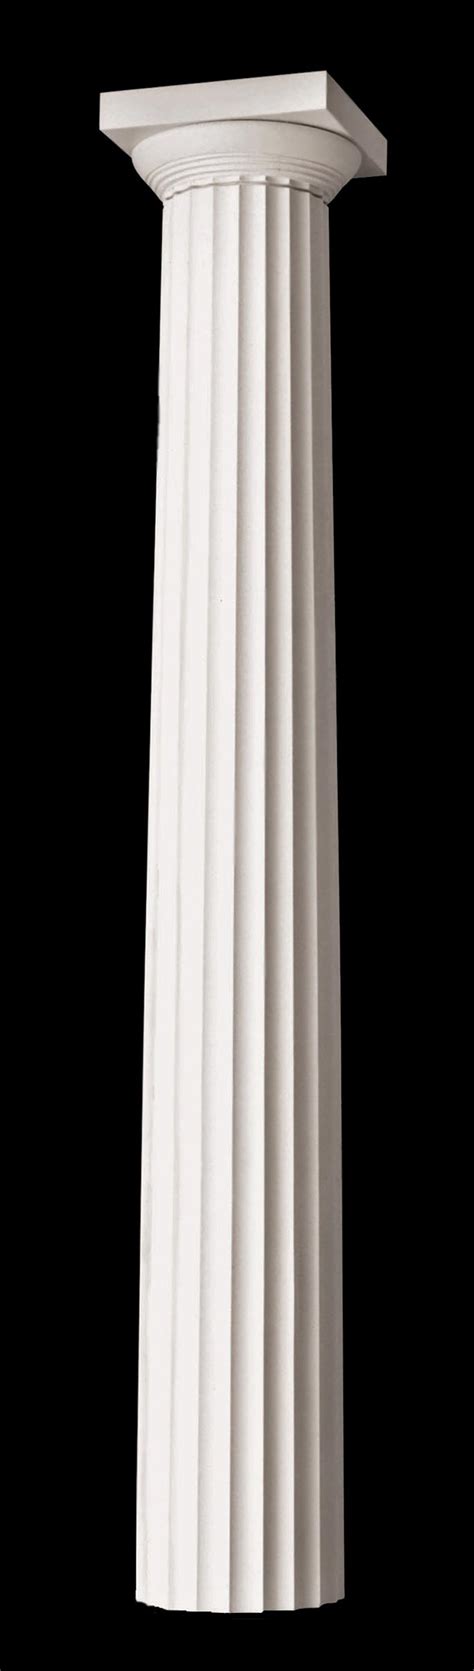 fluted architectural greek doric wood columns csi code